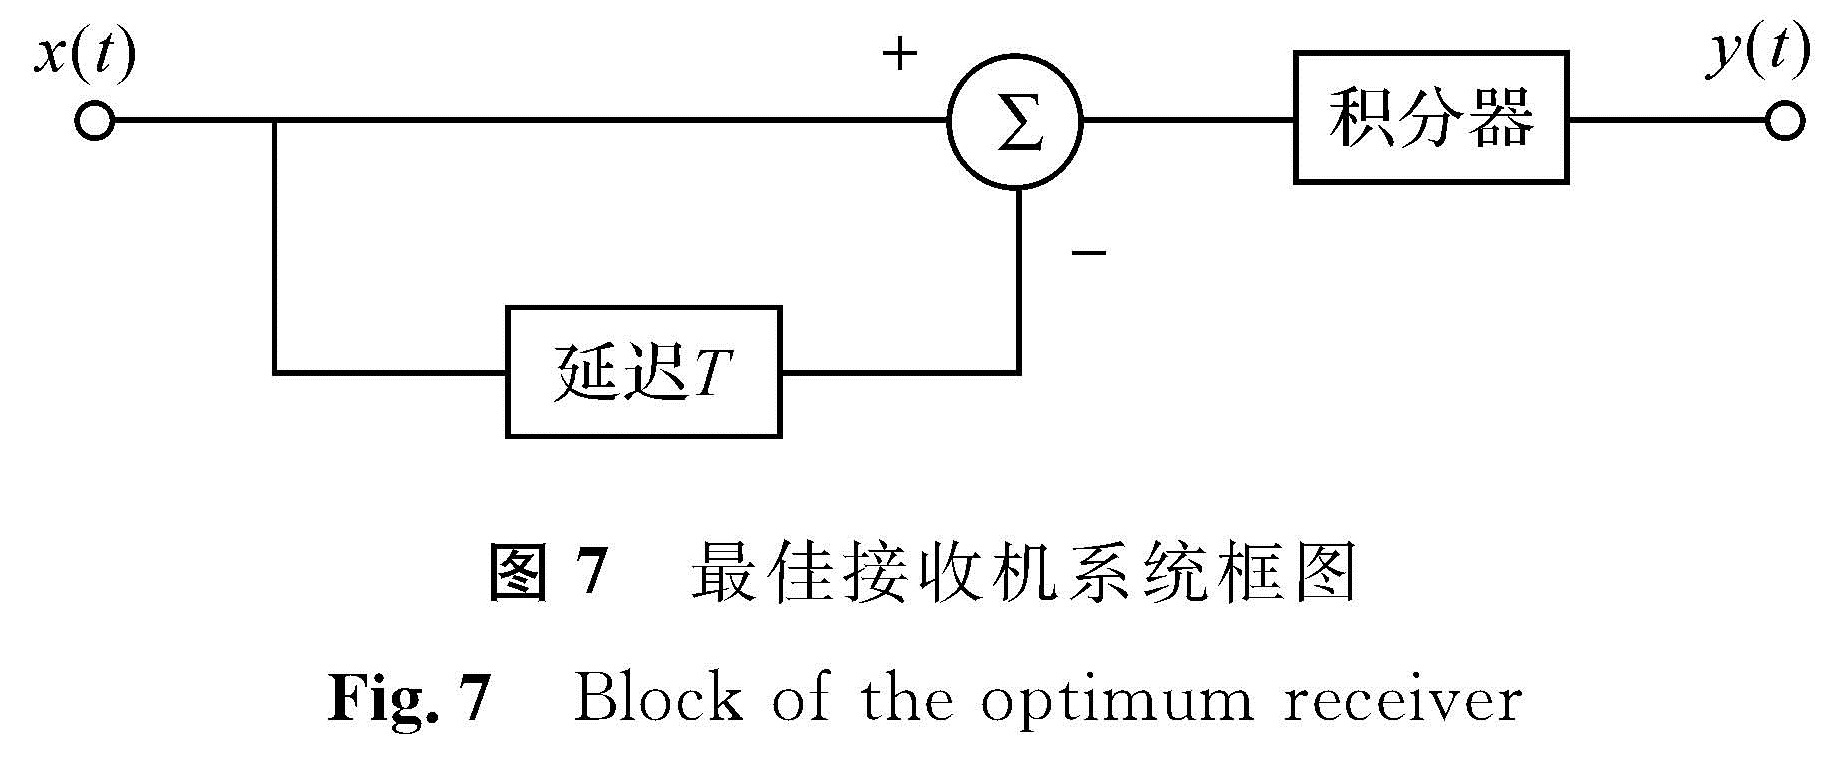 图7 最佳接收机系统框图<br/>Fig.7 Block of the optimum receiver